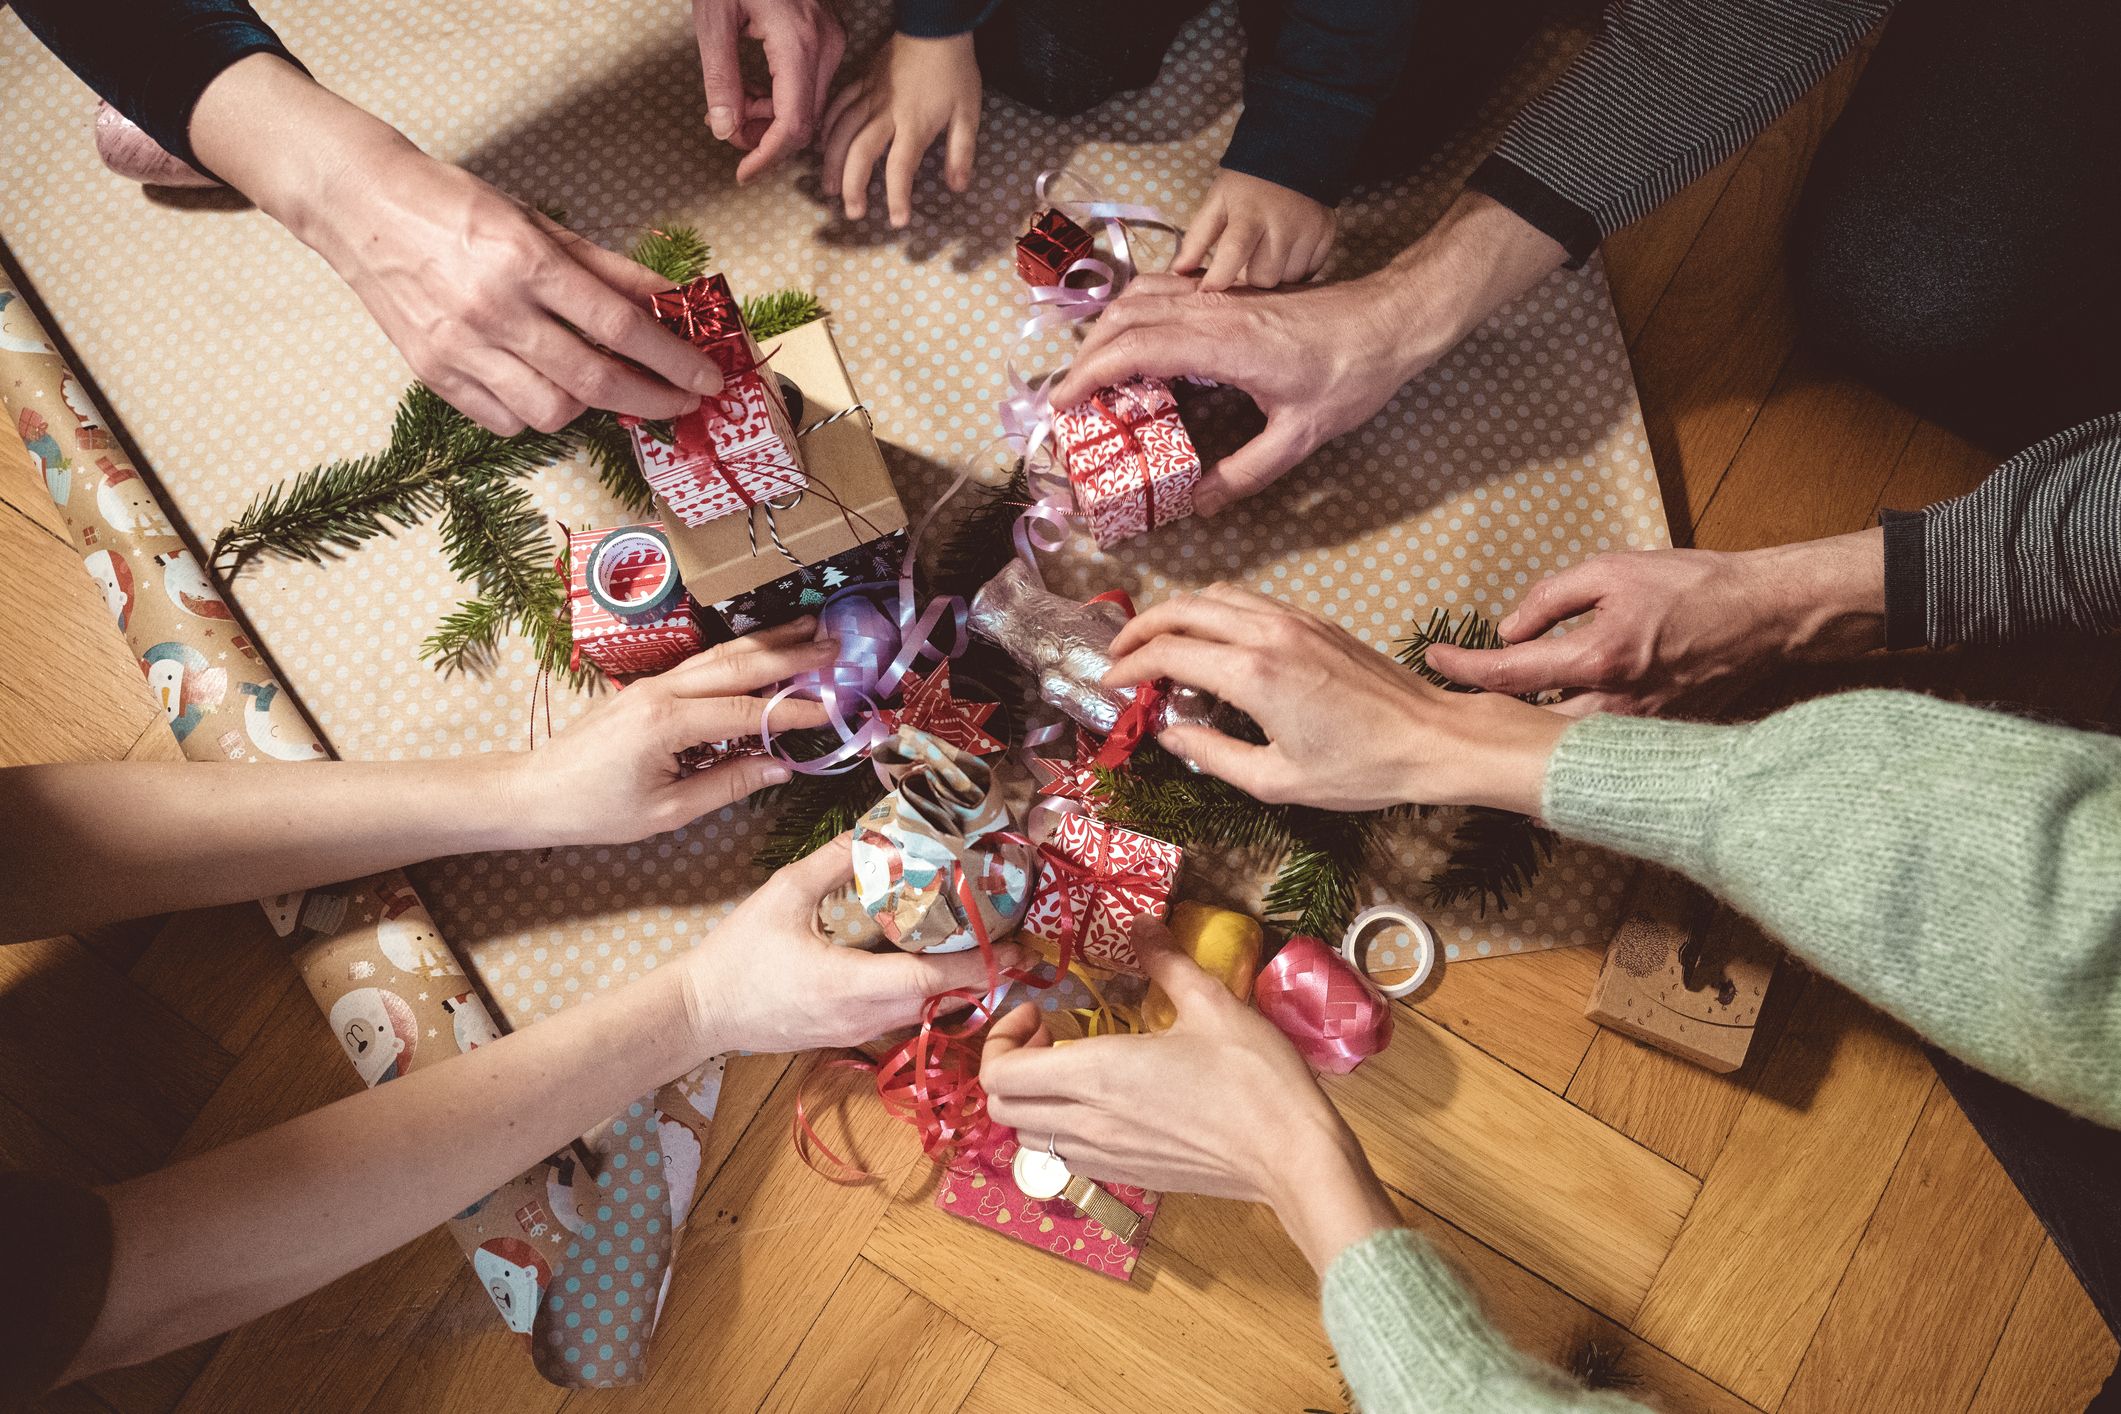 45 Best Secret Santa Gift Ideas Under $25 - Funny Secret Santa Gifts